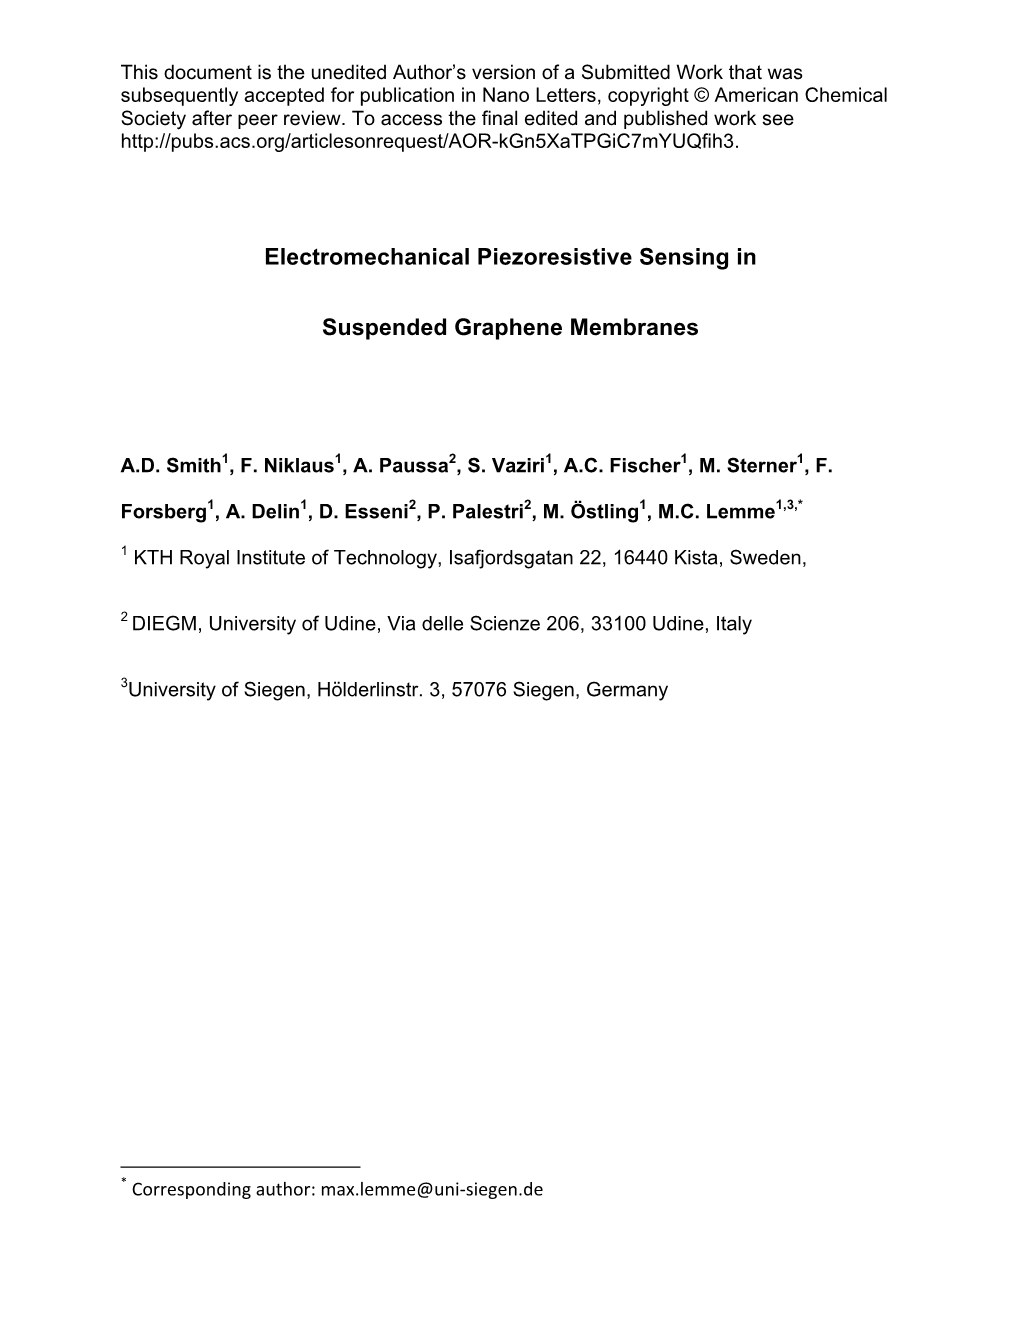 Electromechanical Piezoresistive Sensing in Suspended Graphene